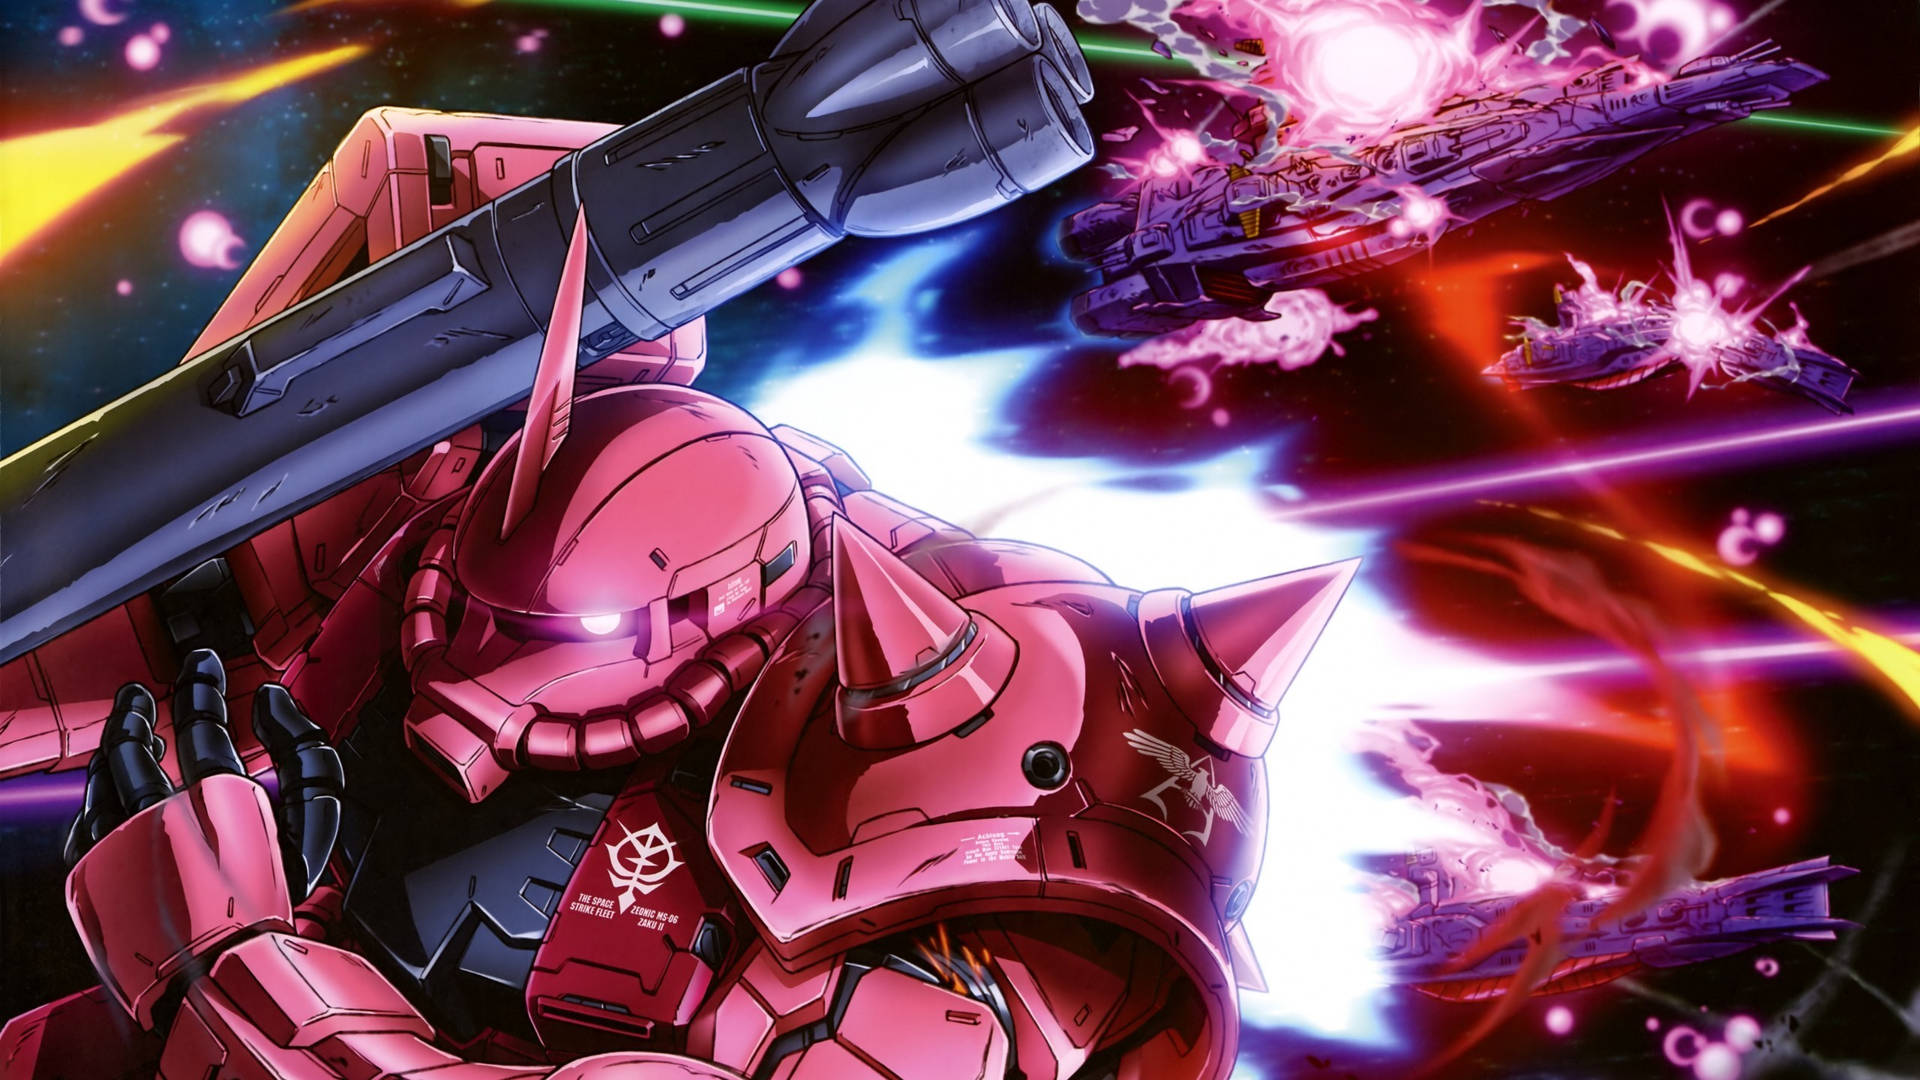 Mobile Suit Gundam A Carrying Rocket Wallpaper